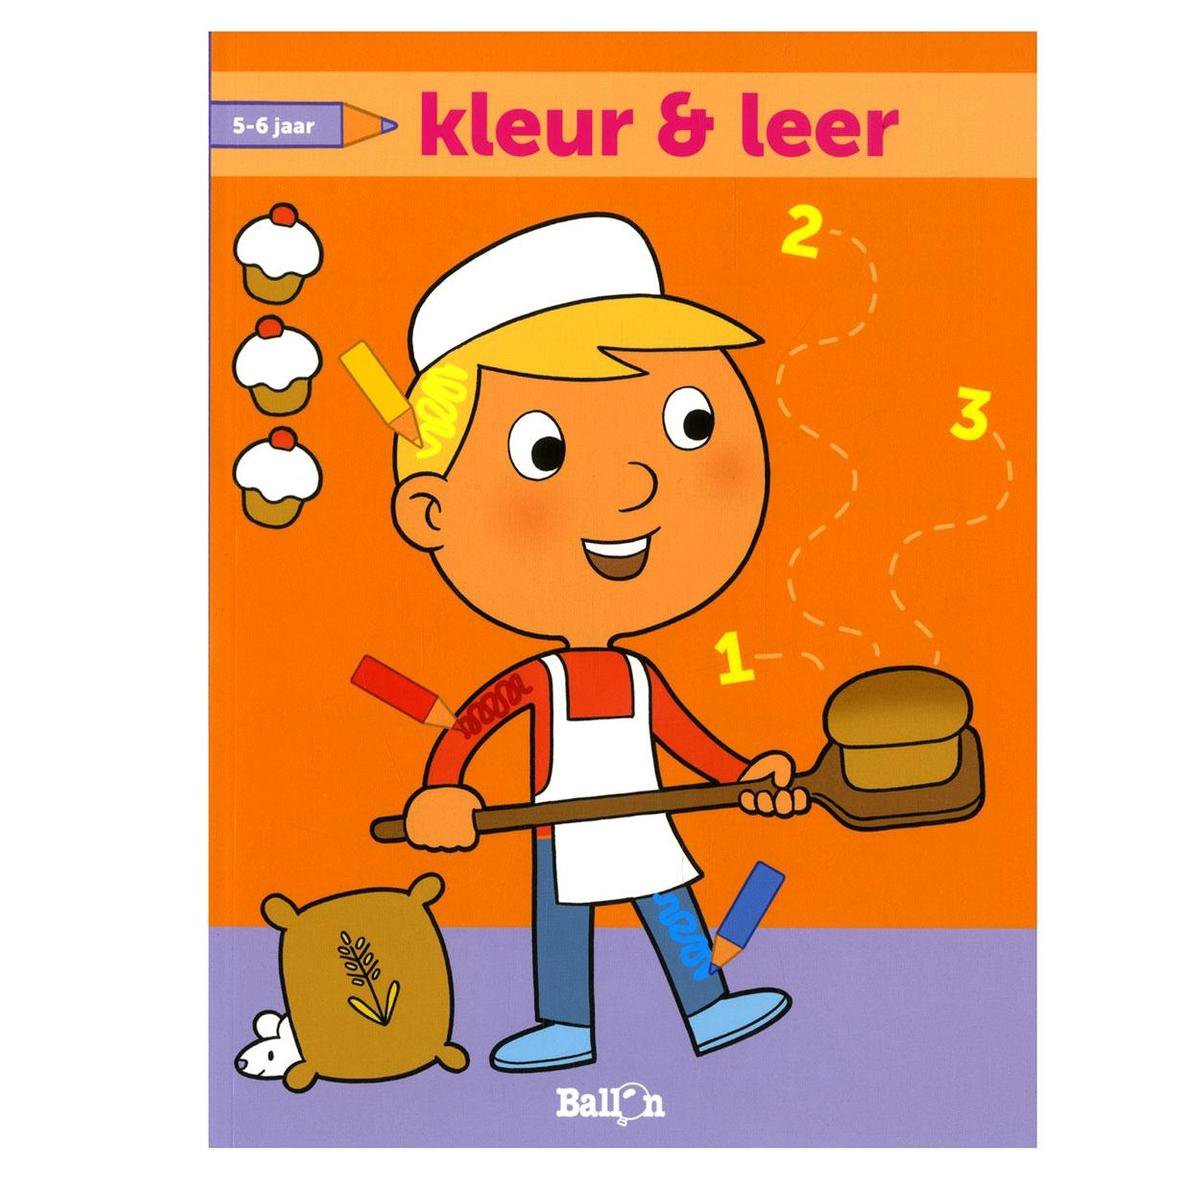 Kleur en leer (5-6 jaar) bakker